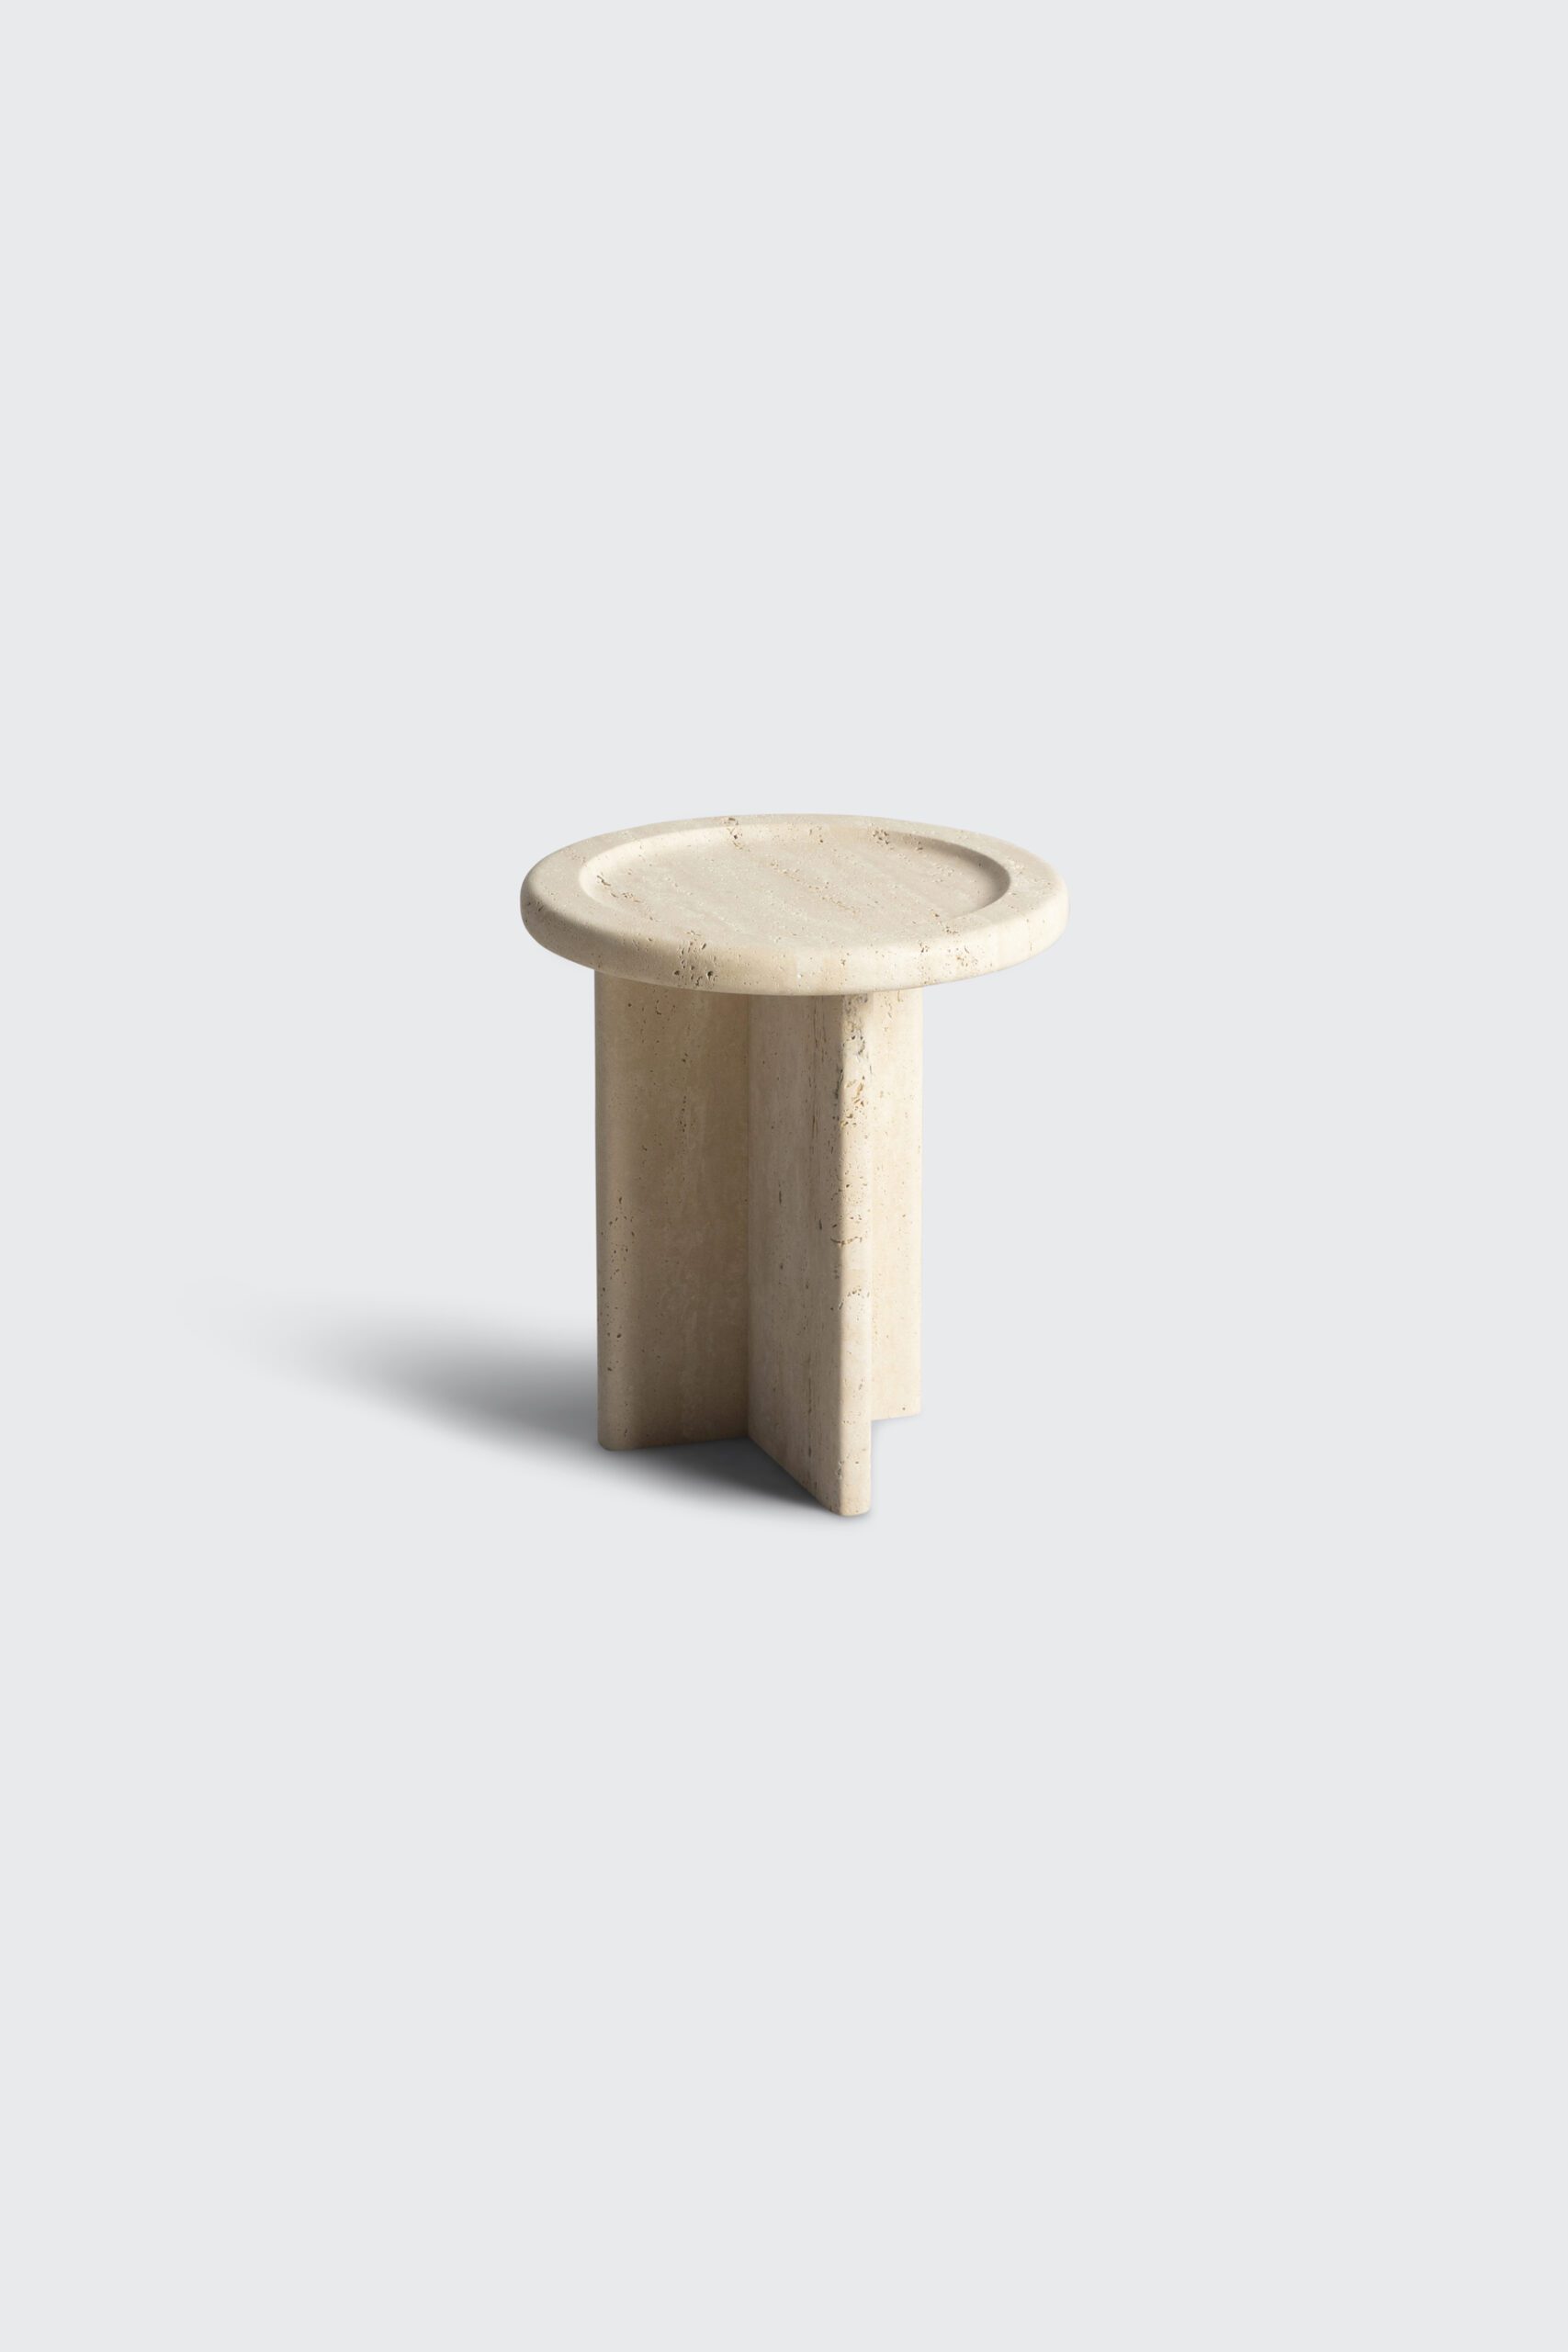 SAV travertine coffee table petite interior design architecture product furniture luxury natural stone divine duo sculpture